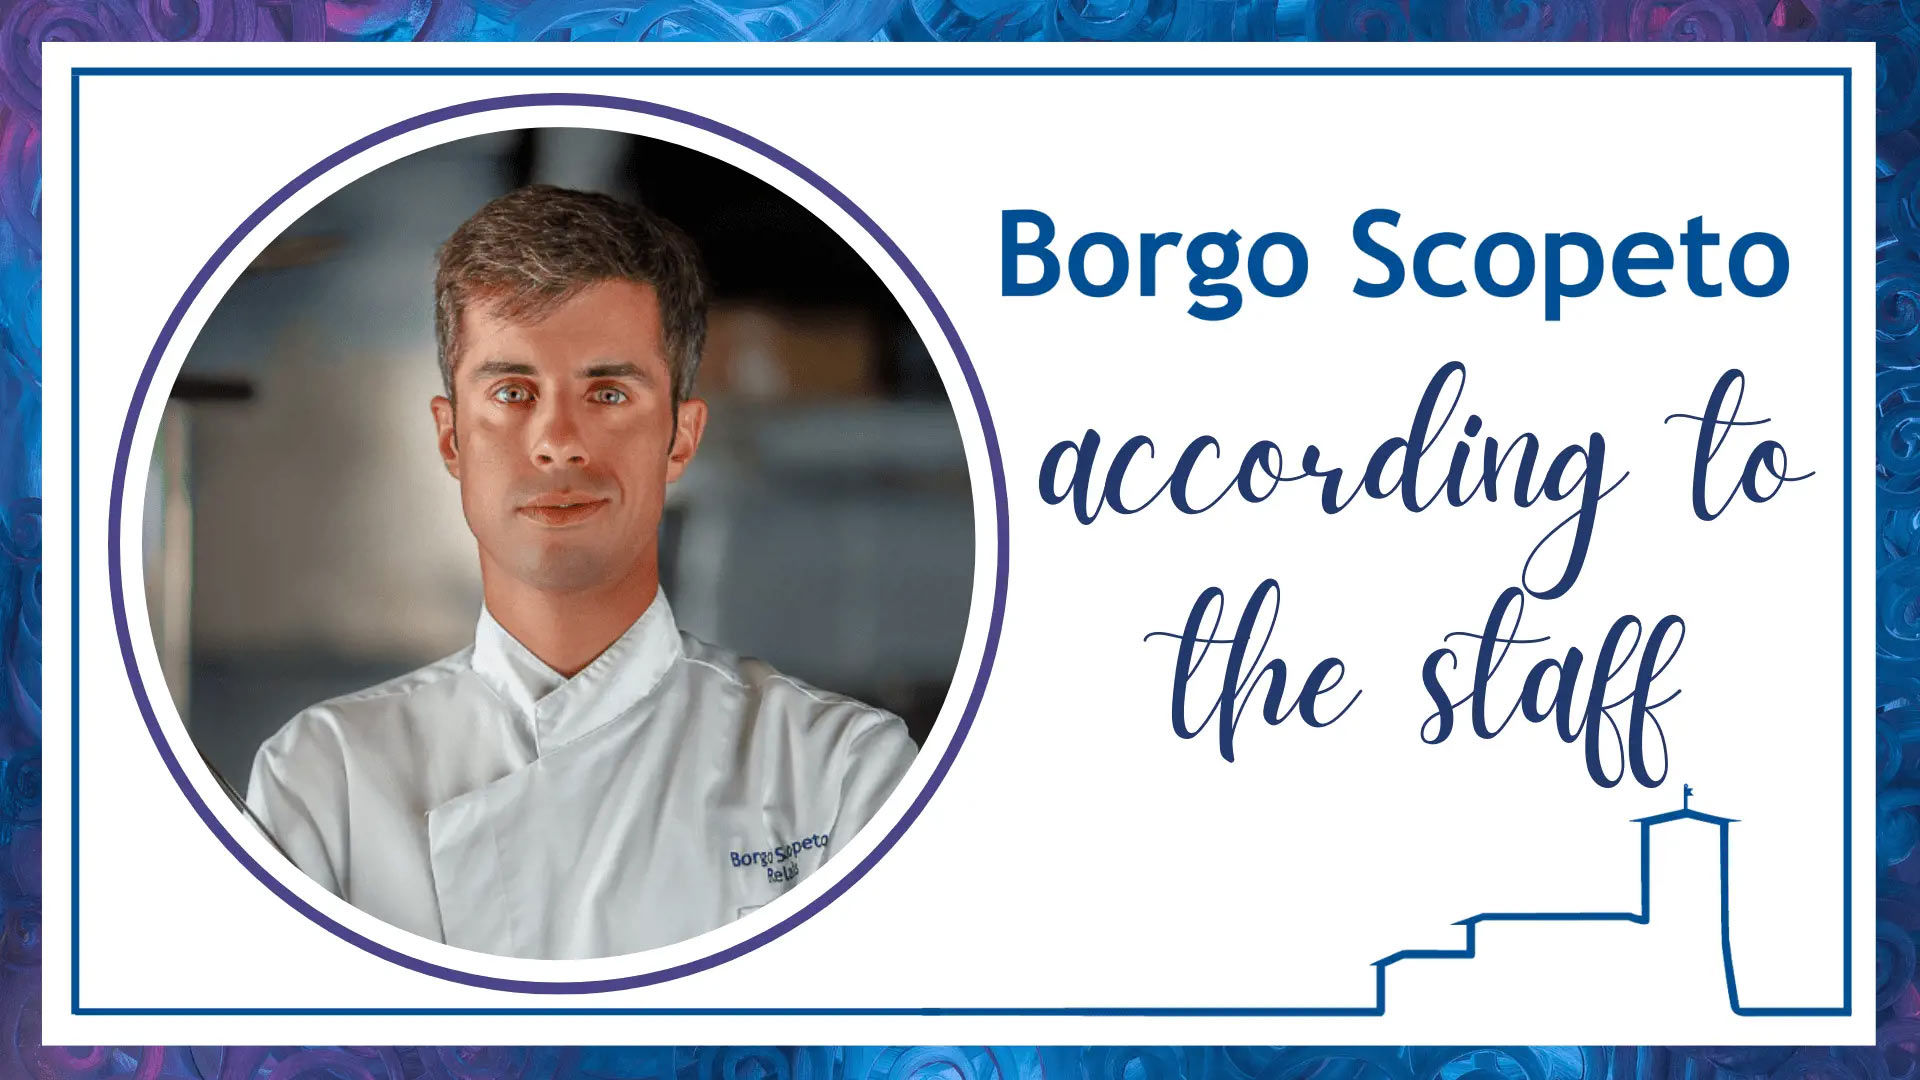 Borgo Scopeto according to the staff - Pietro 19